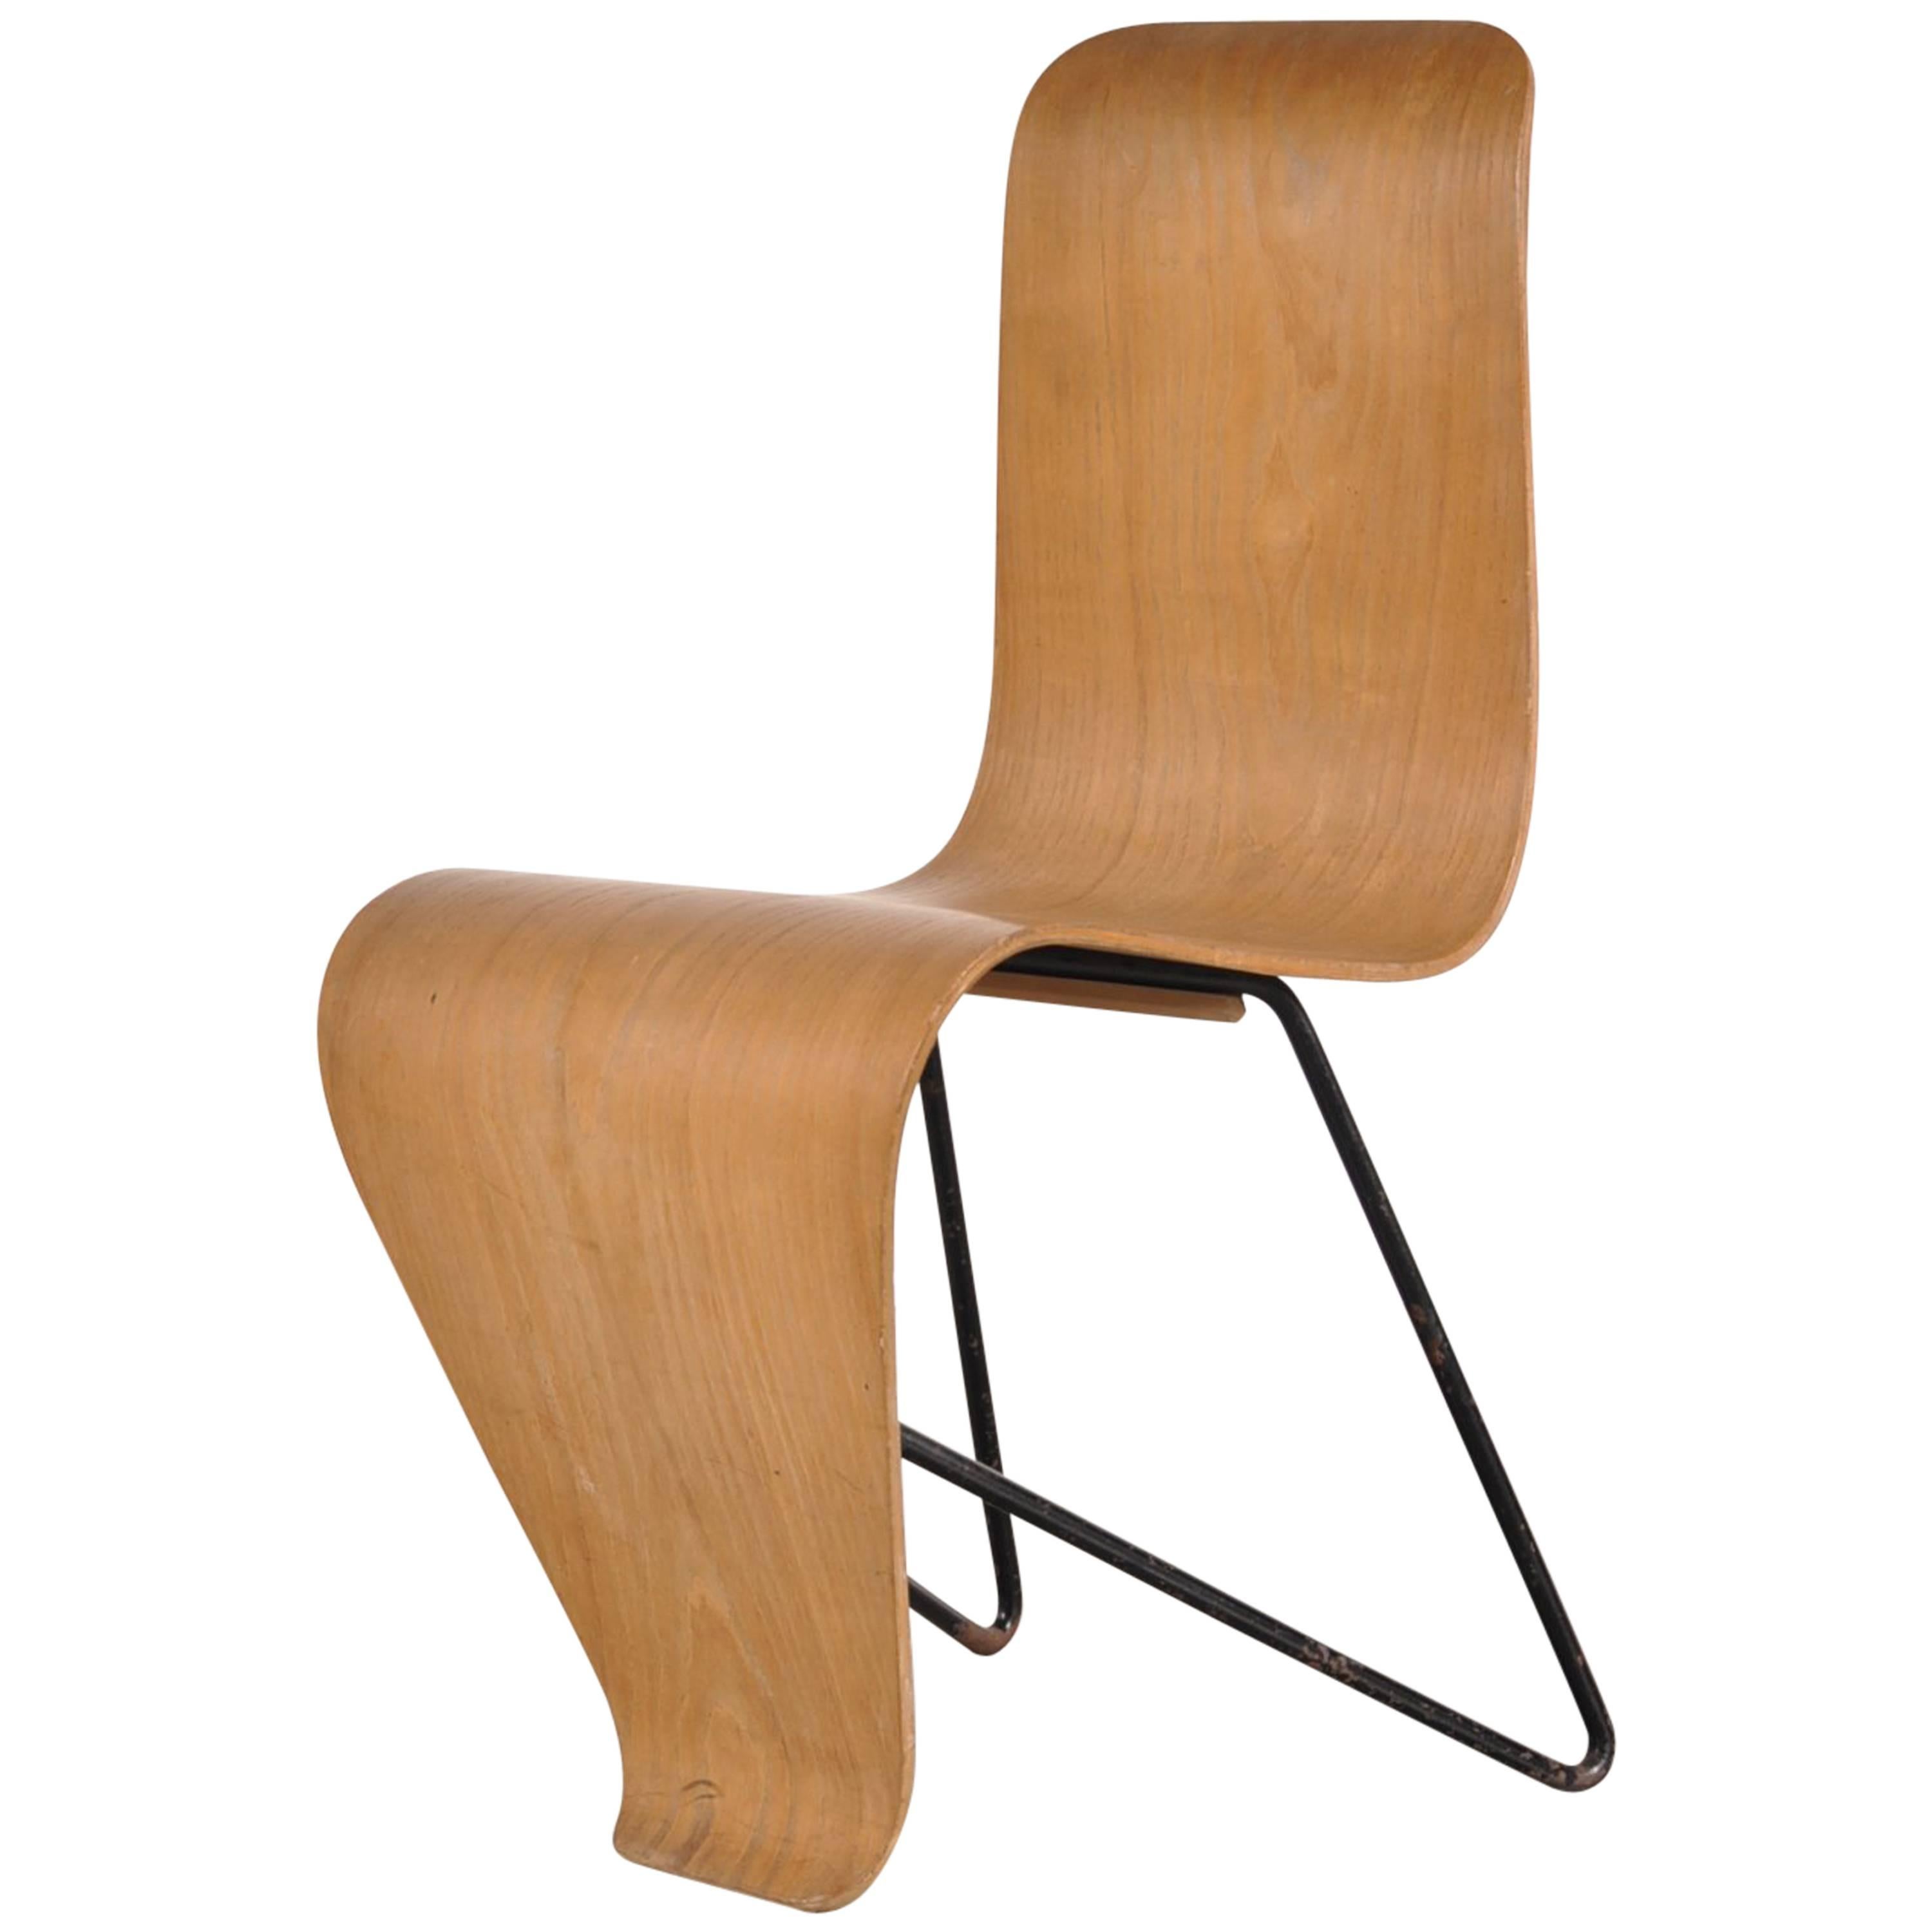 Original Bellevue Chair by André Bloc, circa 1950